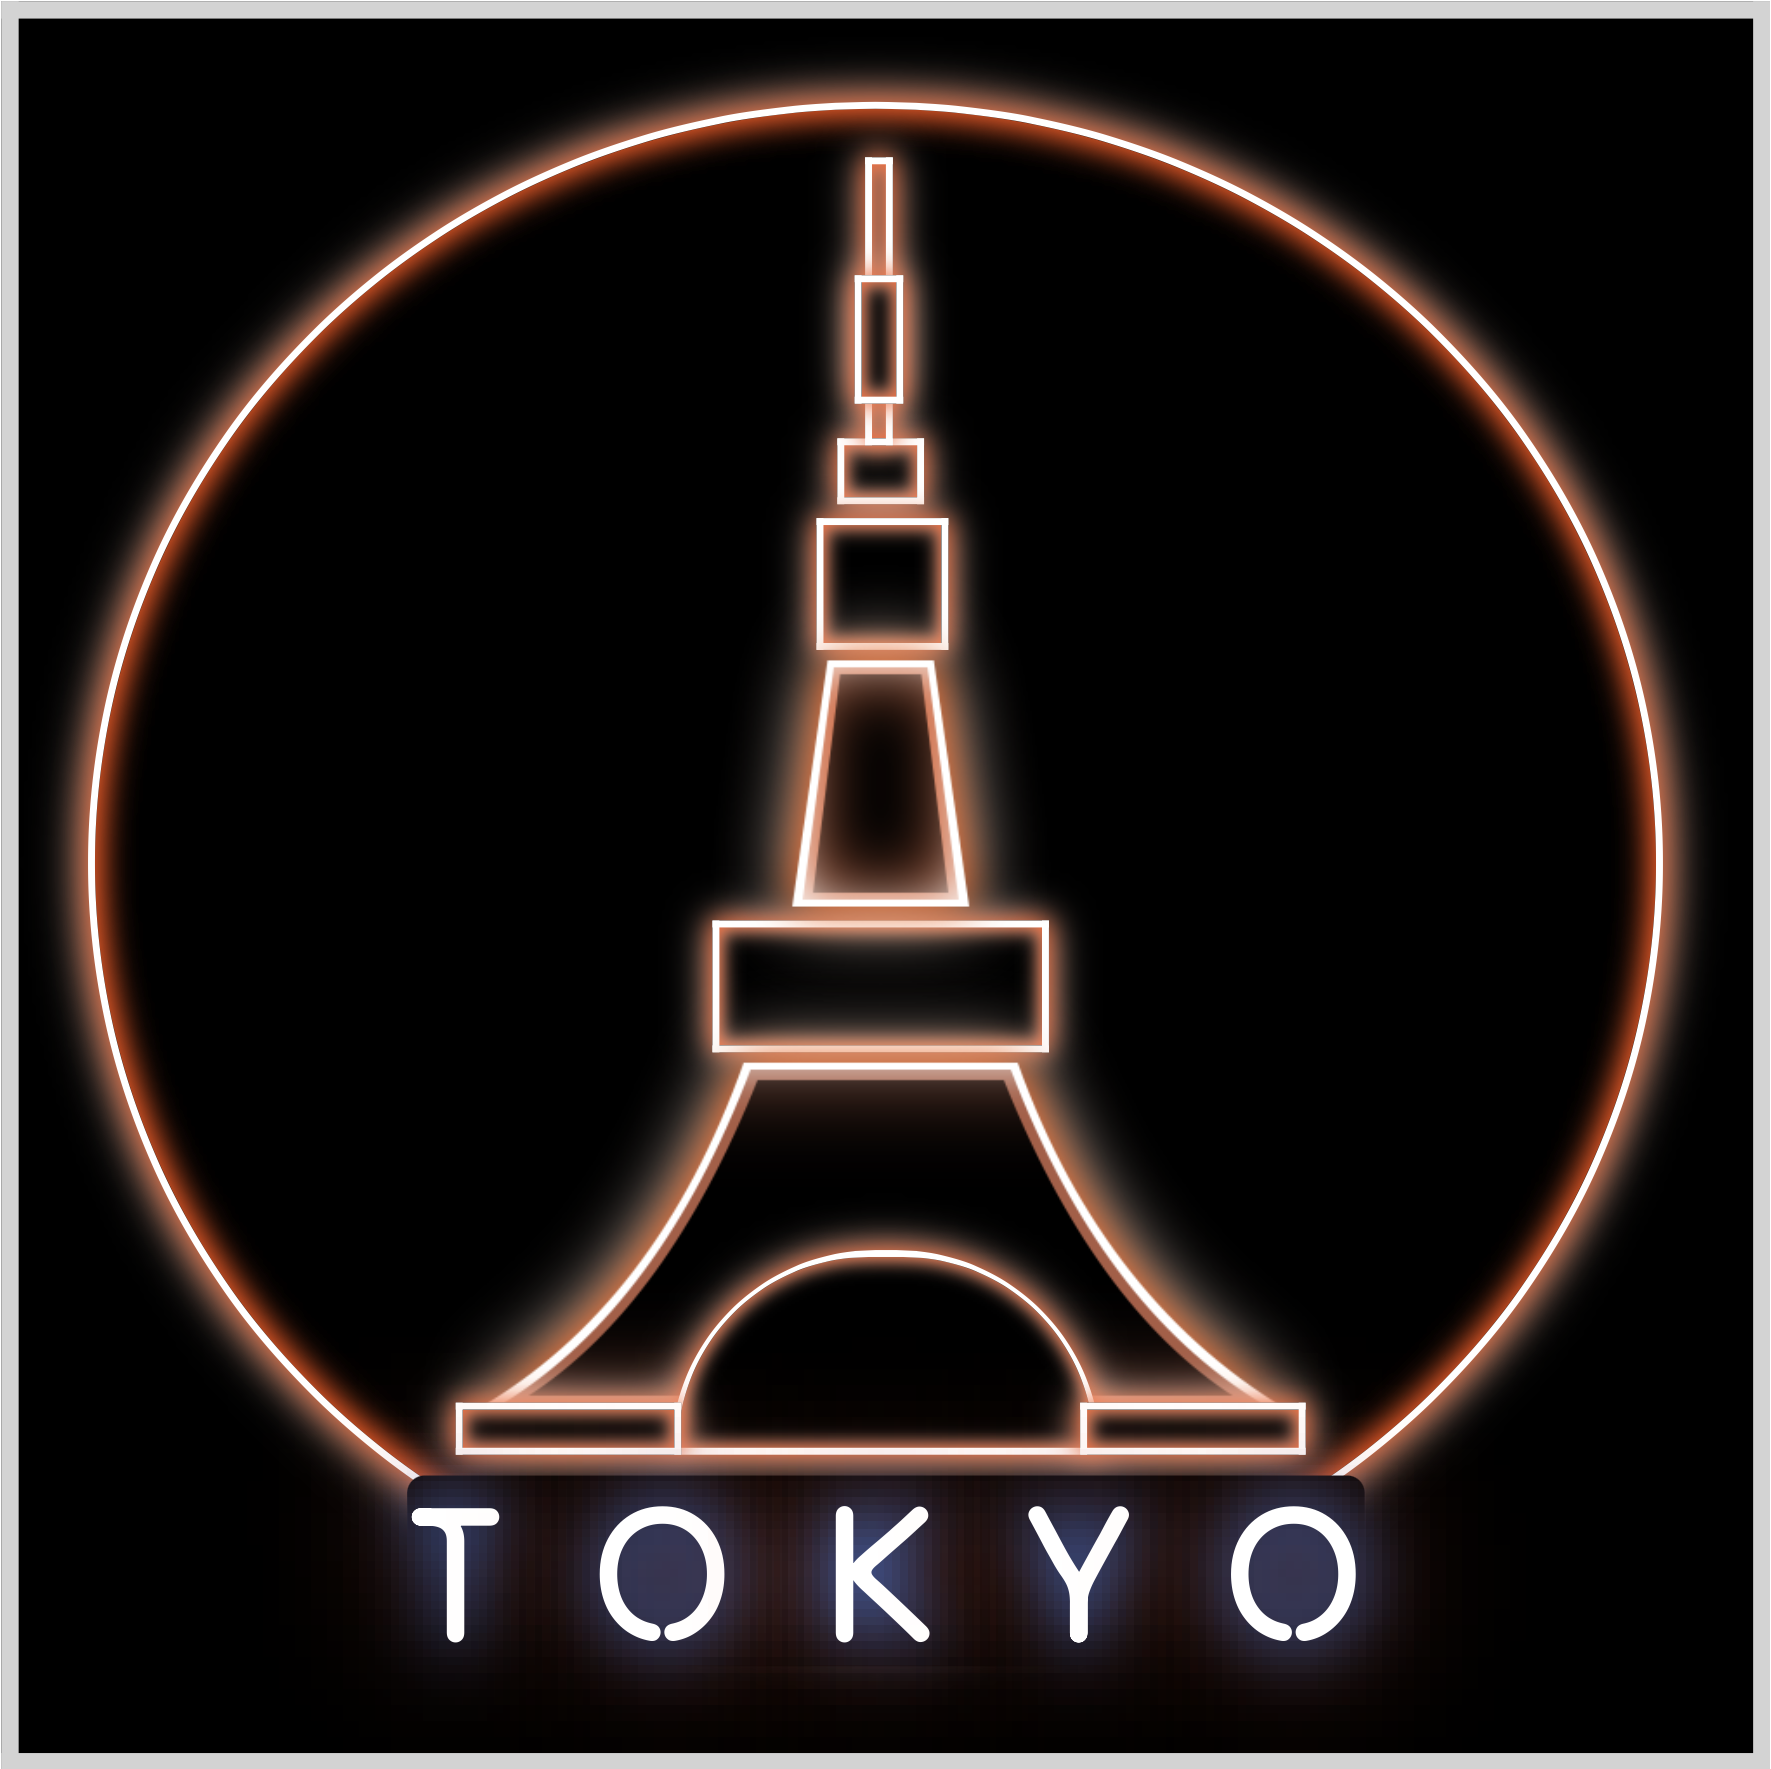 Tokyo Text - Orange shadow applied